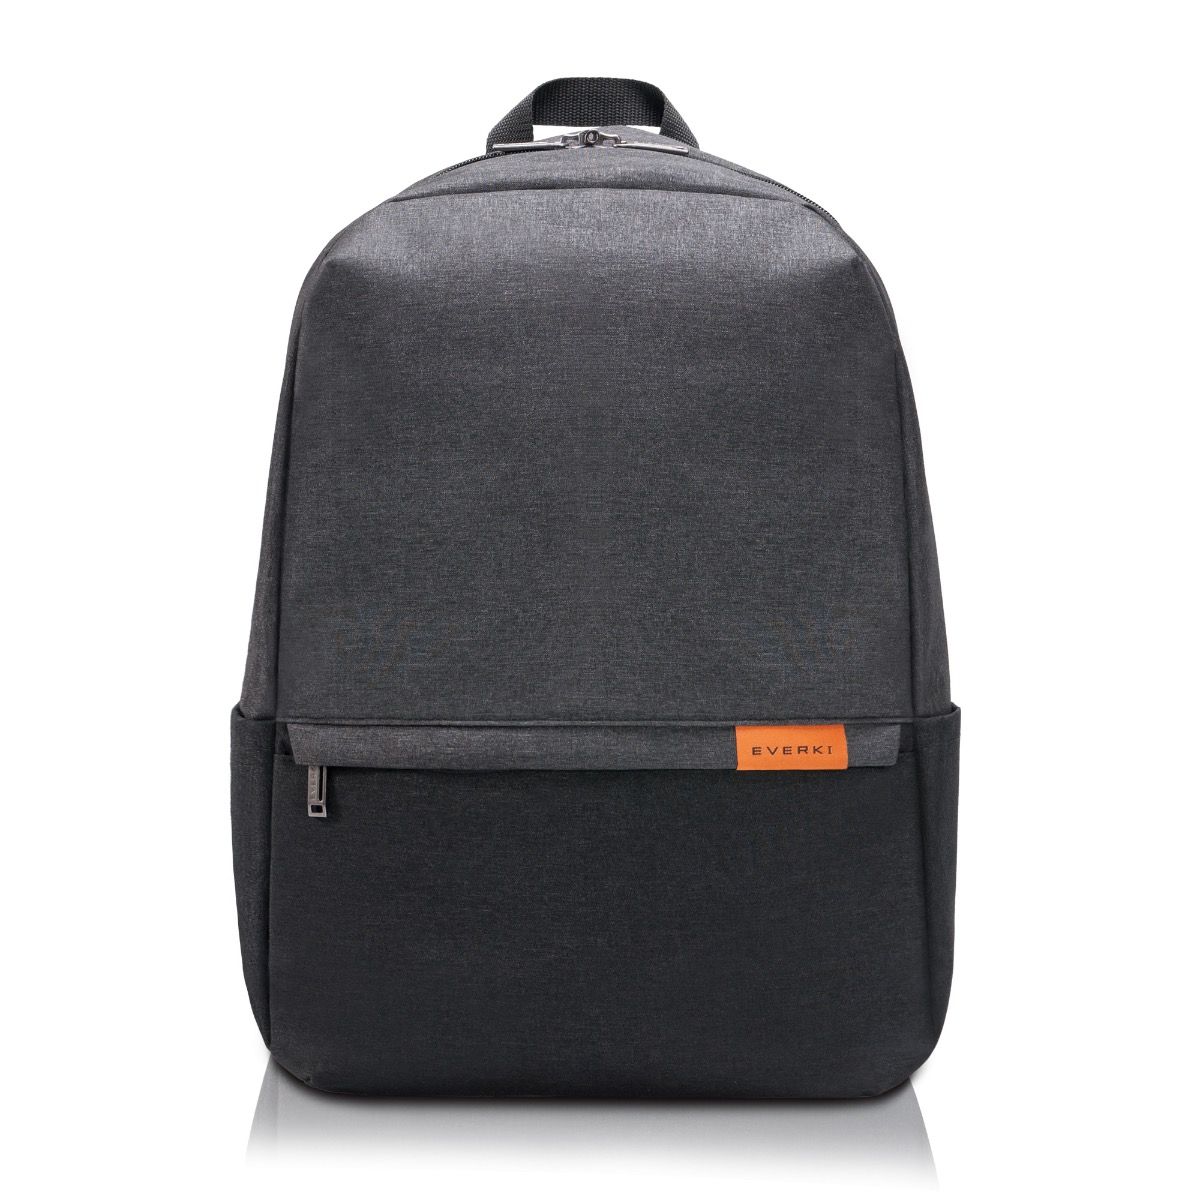 106 Light Laptop Backpack, up to 15.6-Inch | EVERKI